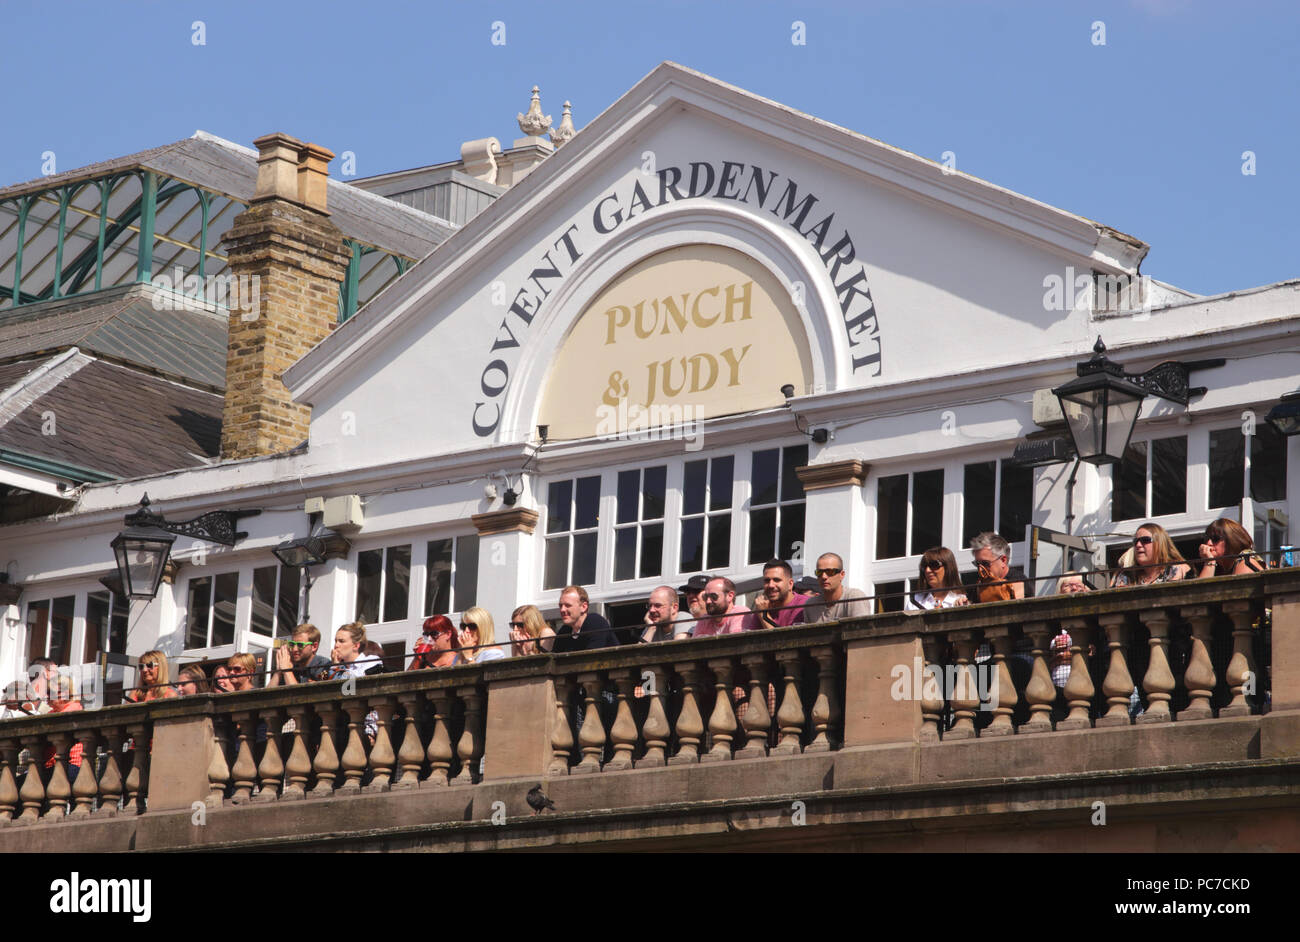 Punch and Judy Bar Covent Garden Market summer 2017 Stock Photo